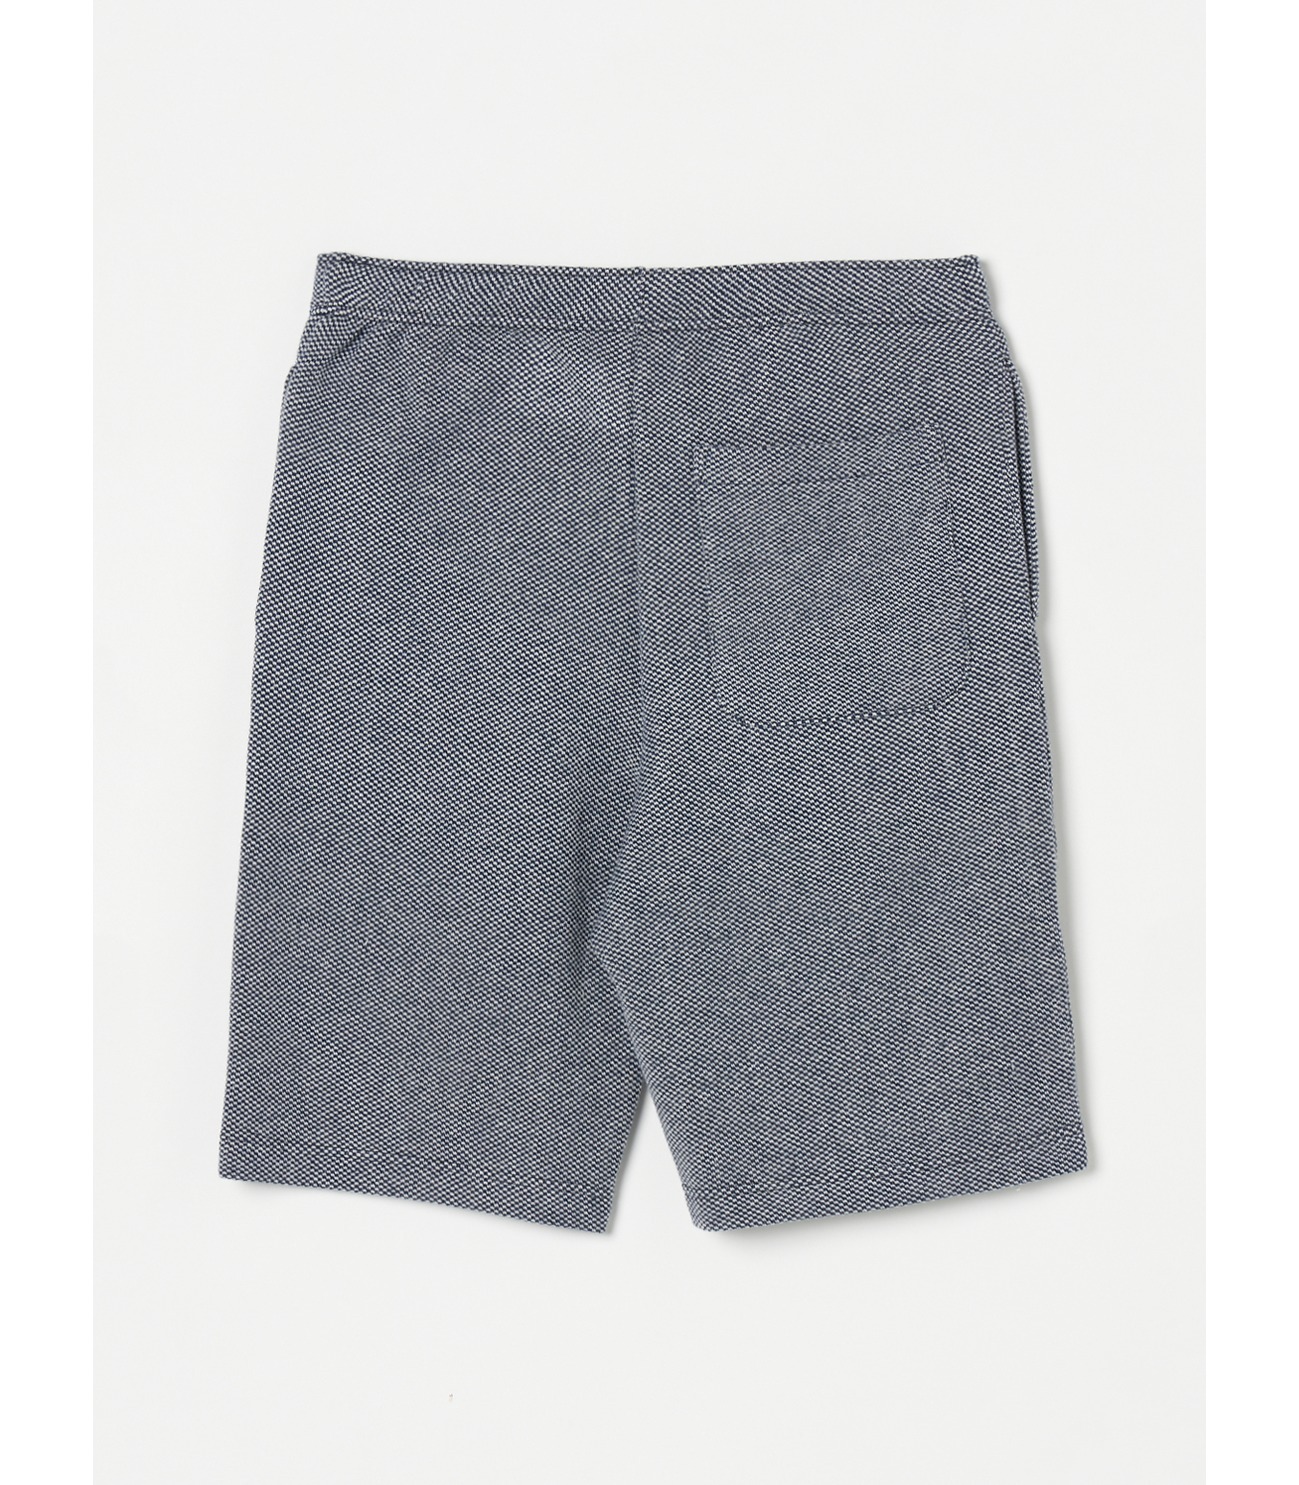 Men's inlay shorts 詳細画像 navy 1